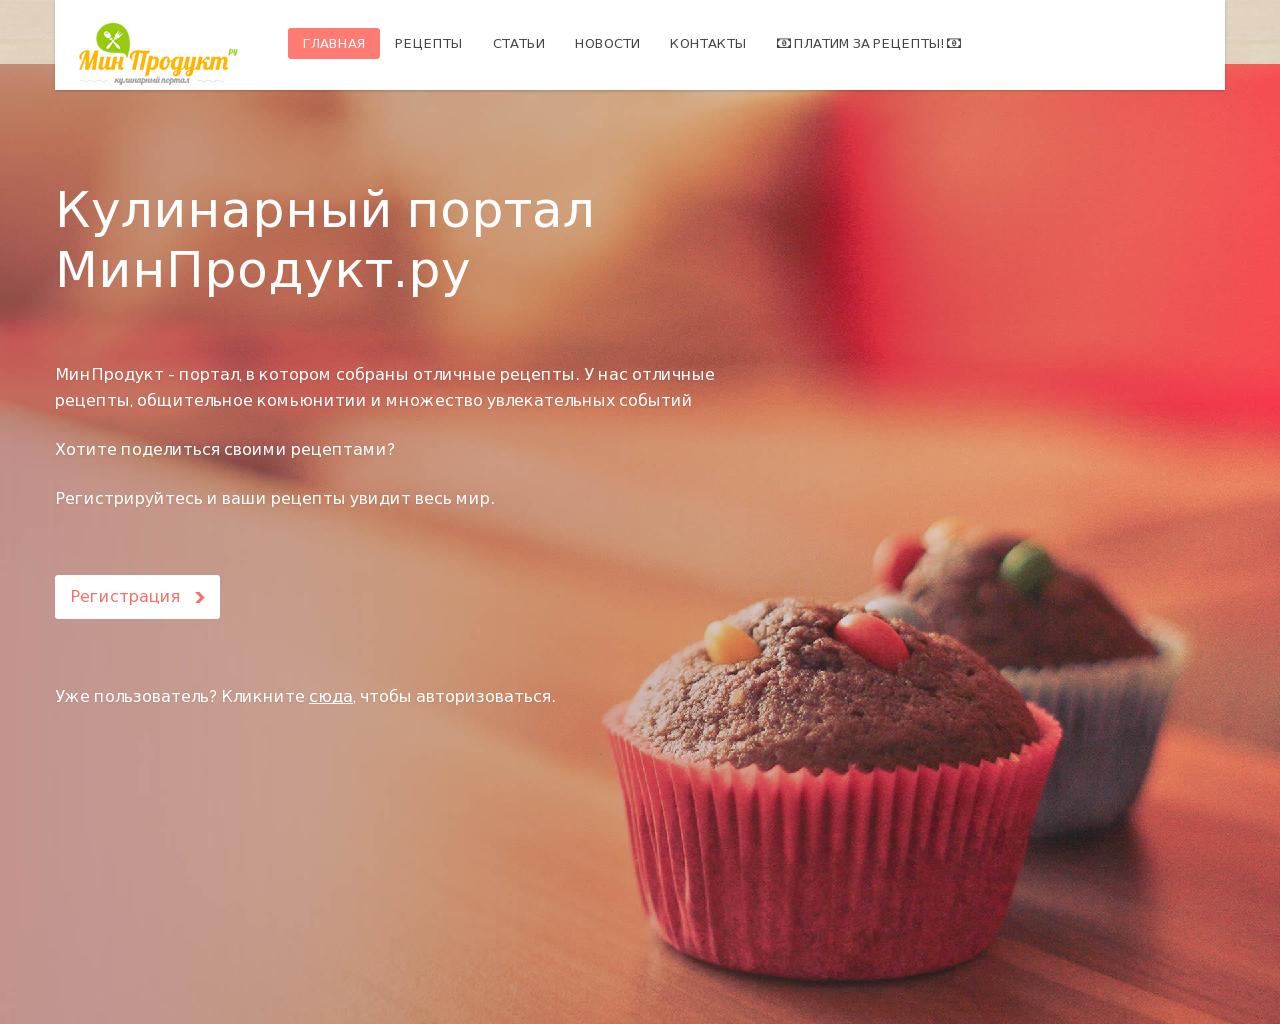 Изображение сайта minproduct.ru в разрешении 1280x1024